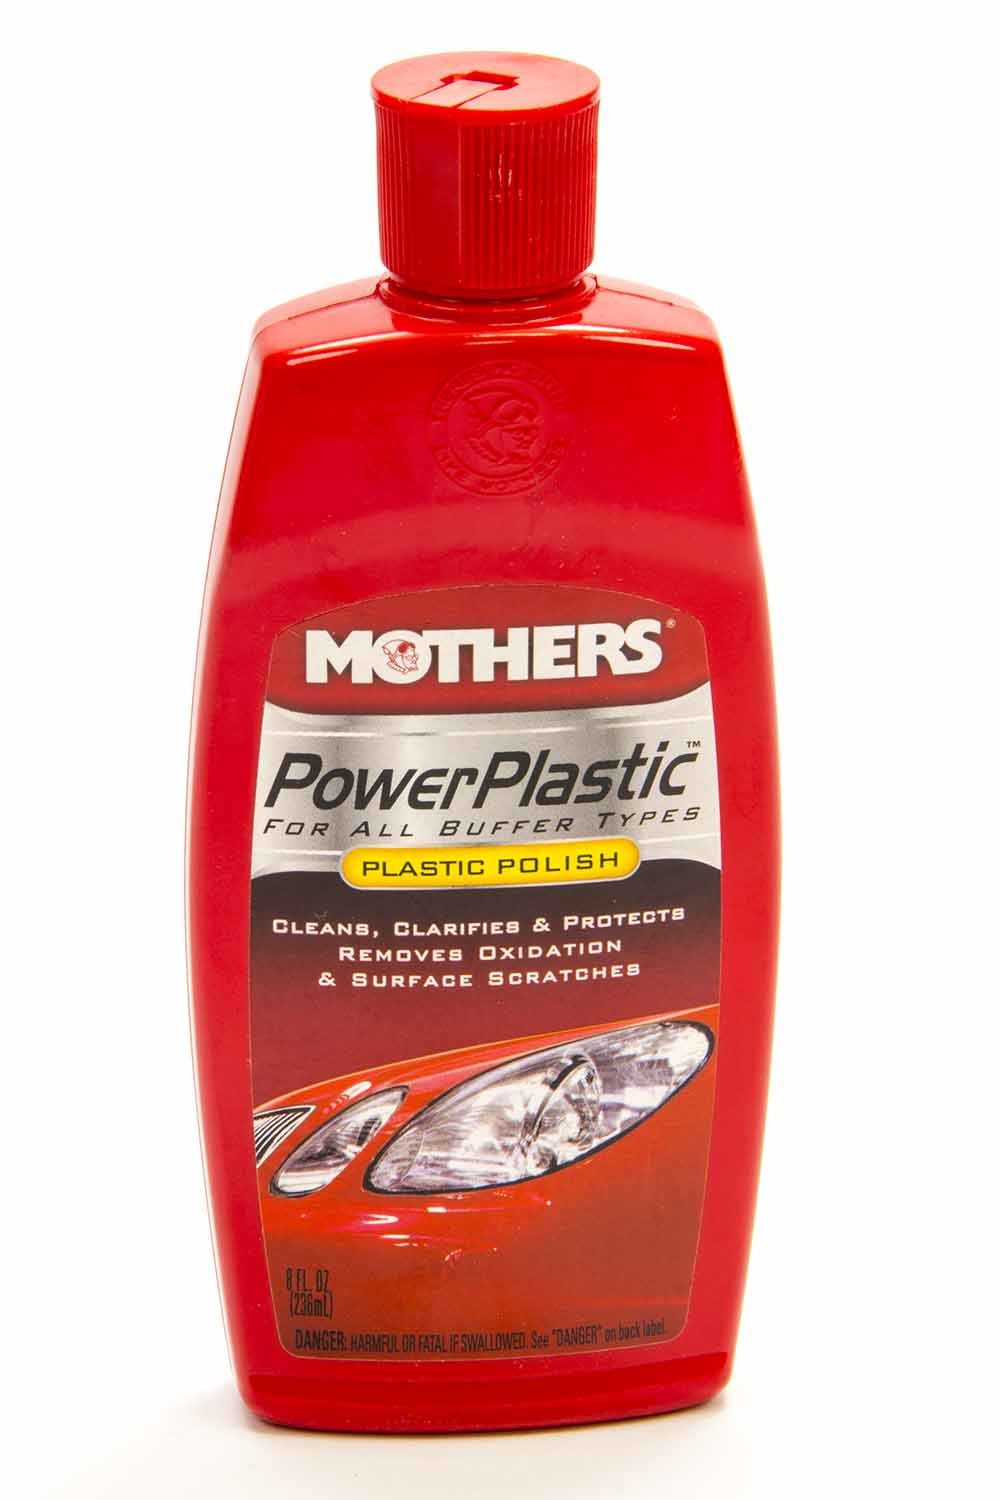 MOTHERS Plastic Polish, Power Plastic, 8.00 oz, Each